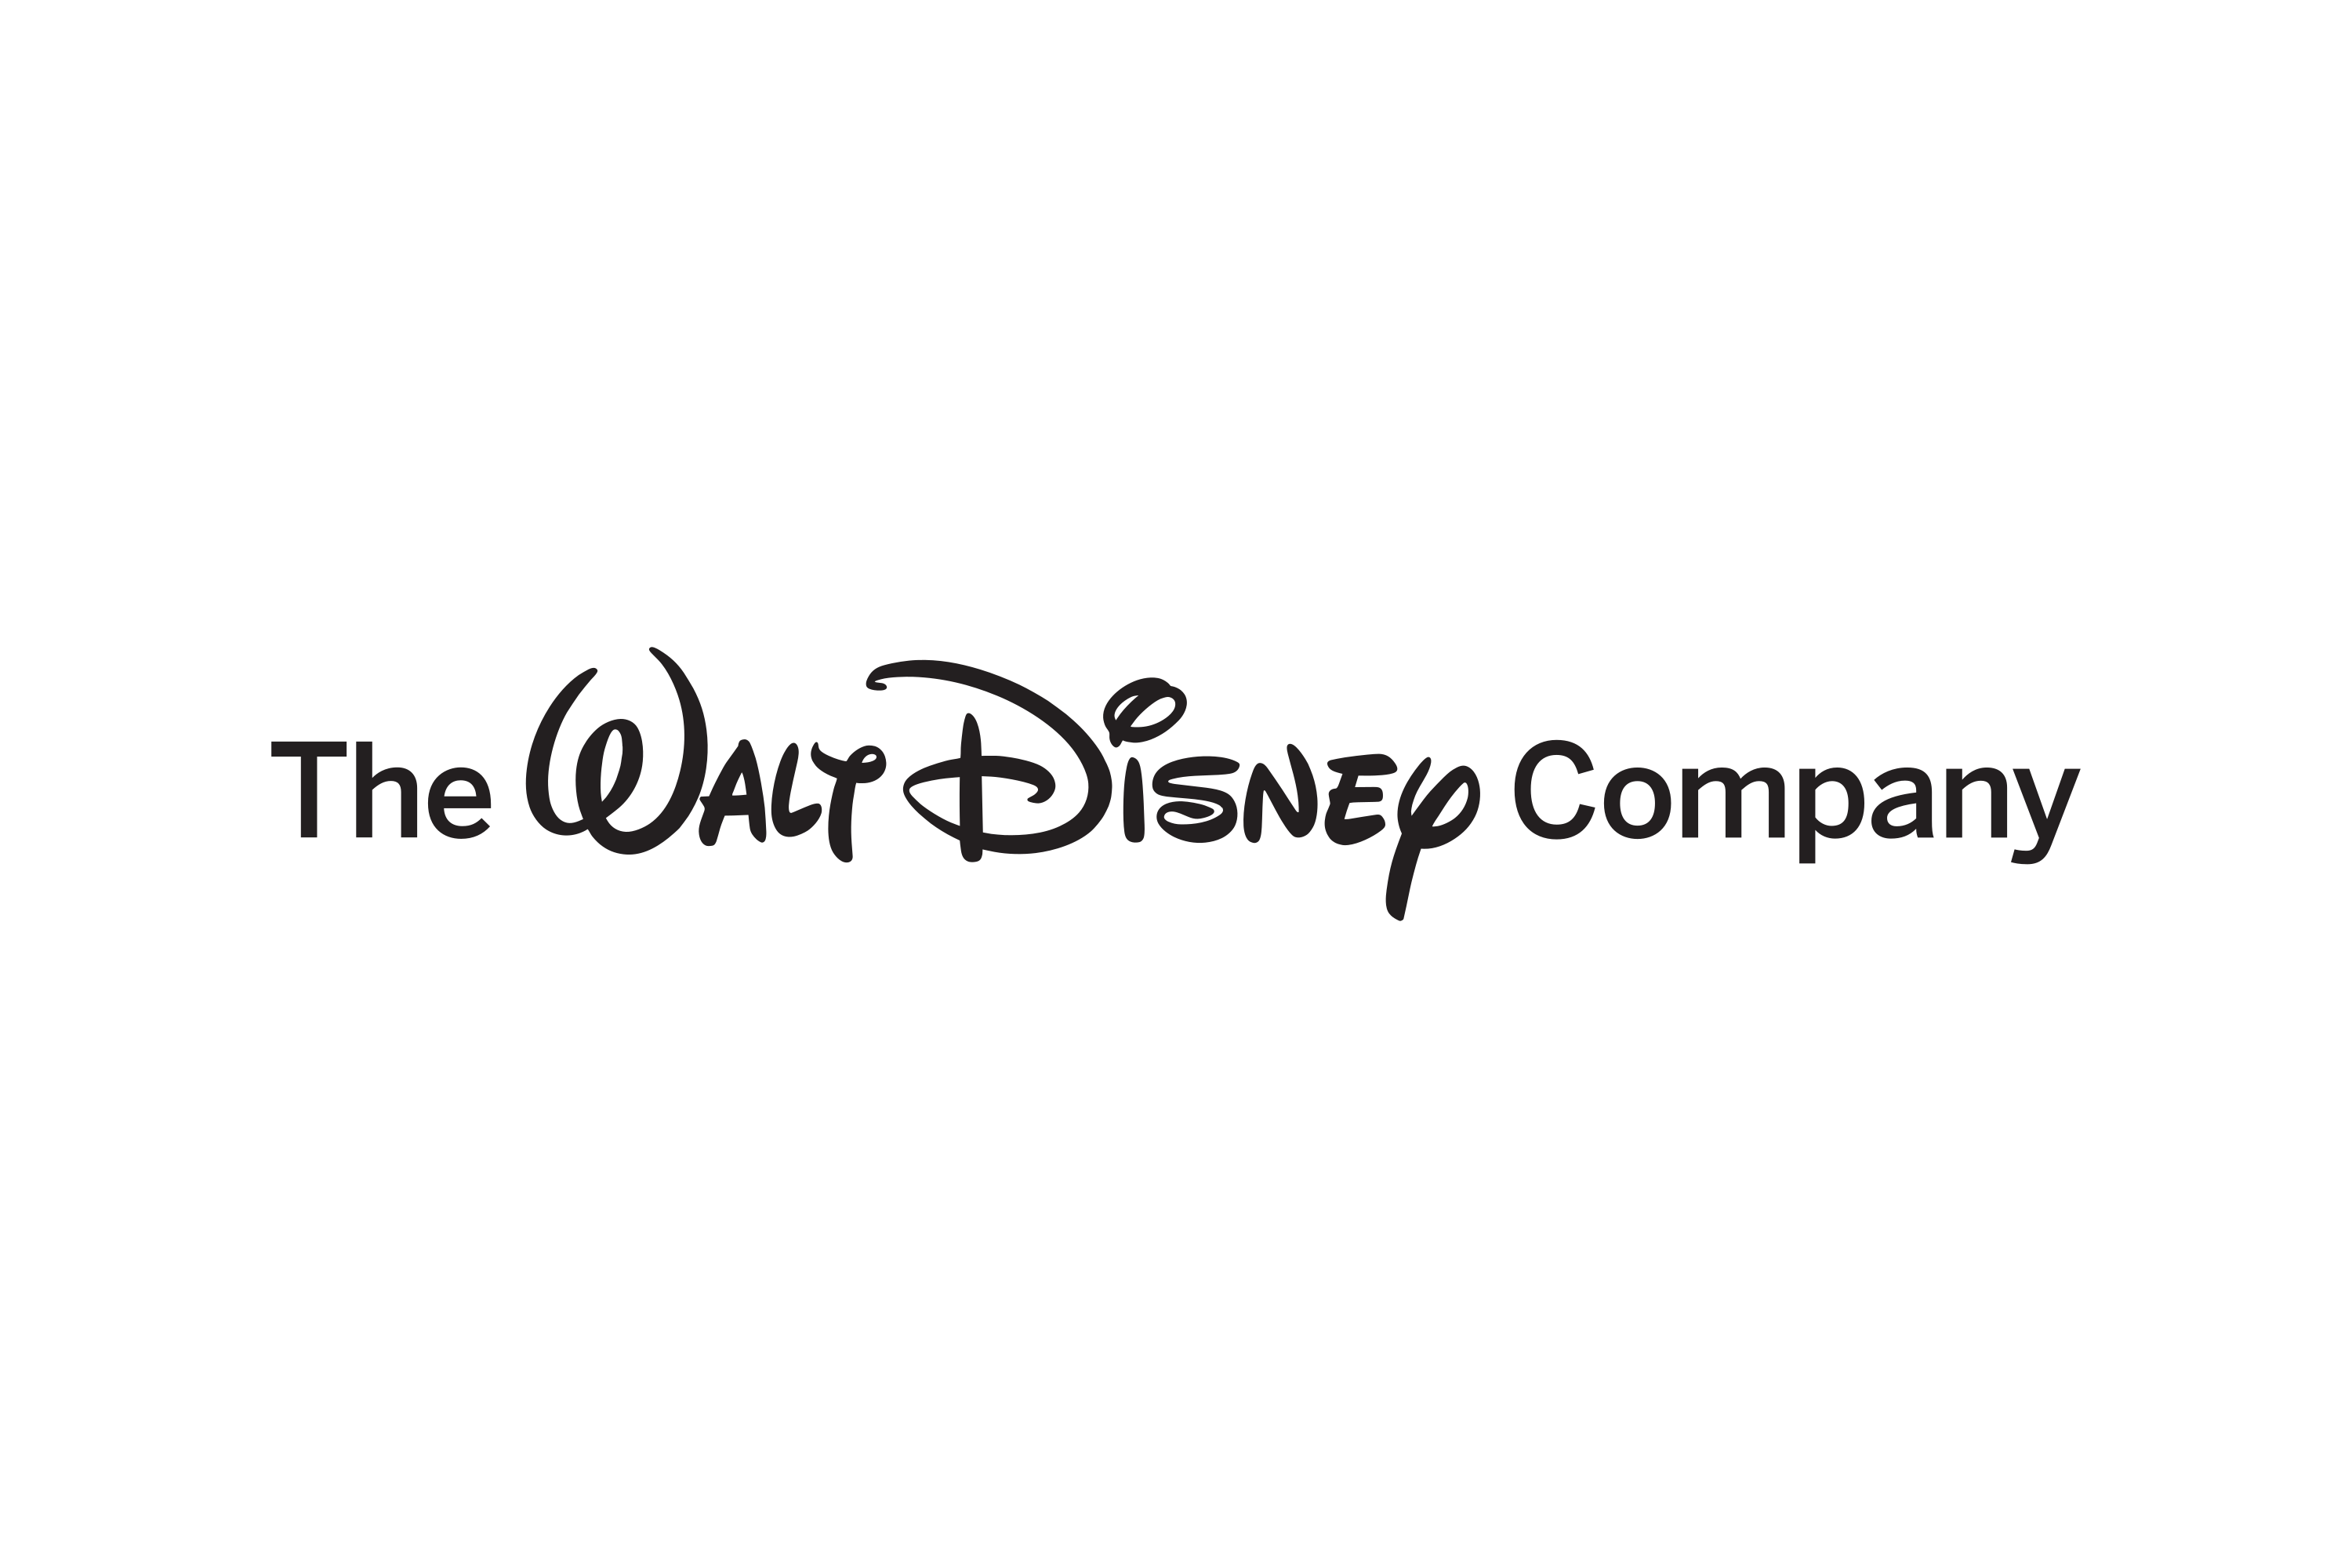 The Walt Disney Company Logo